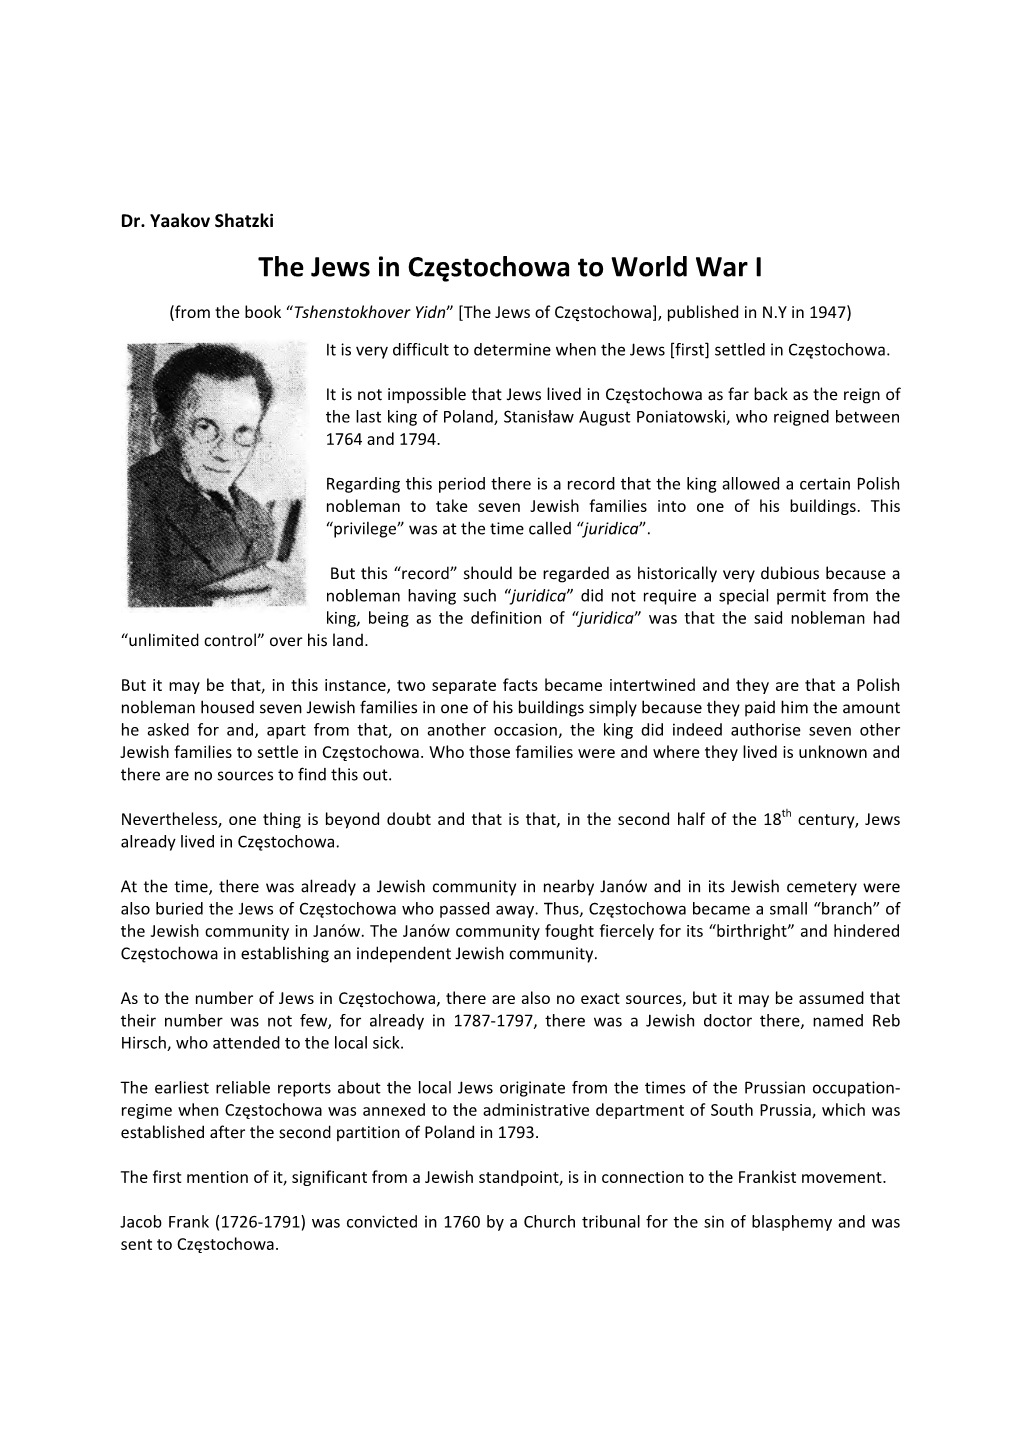 The Jews in Częstochowa to World War I